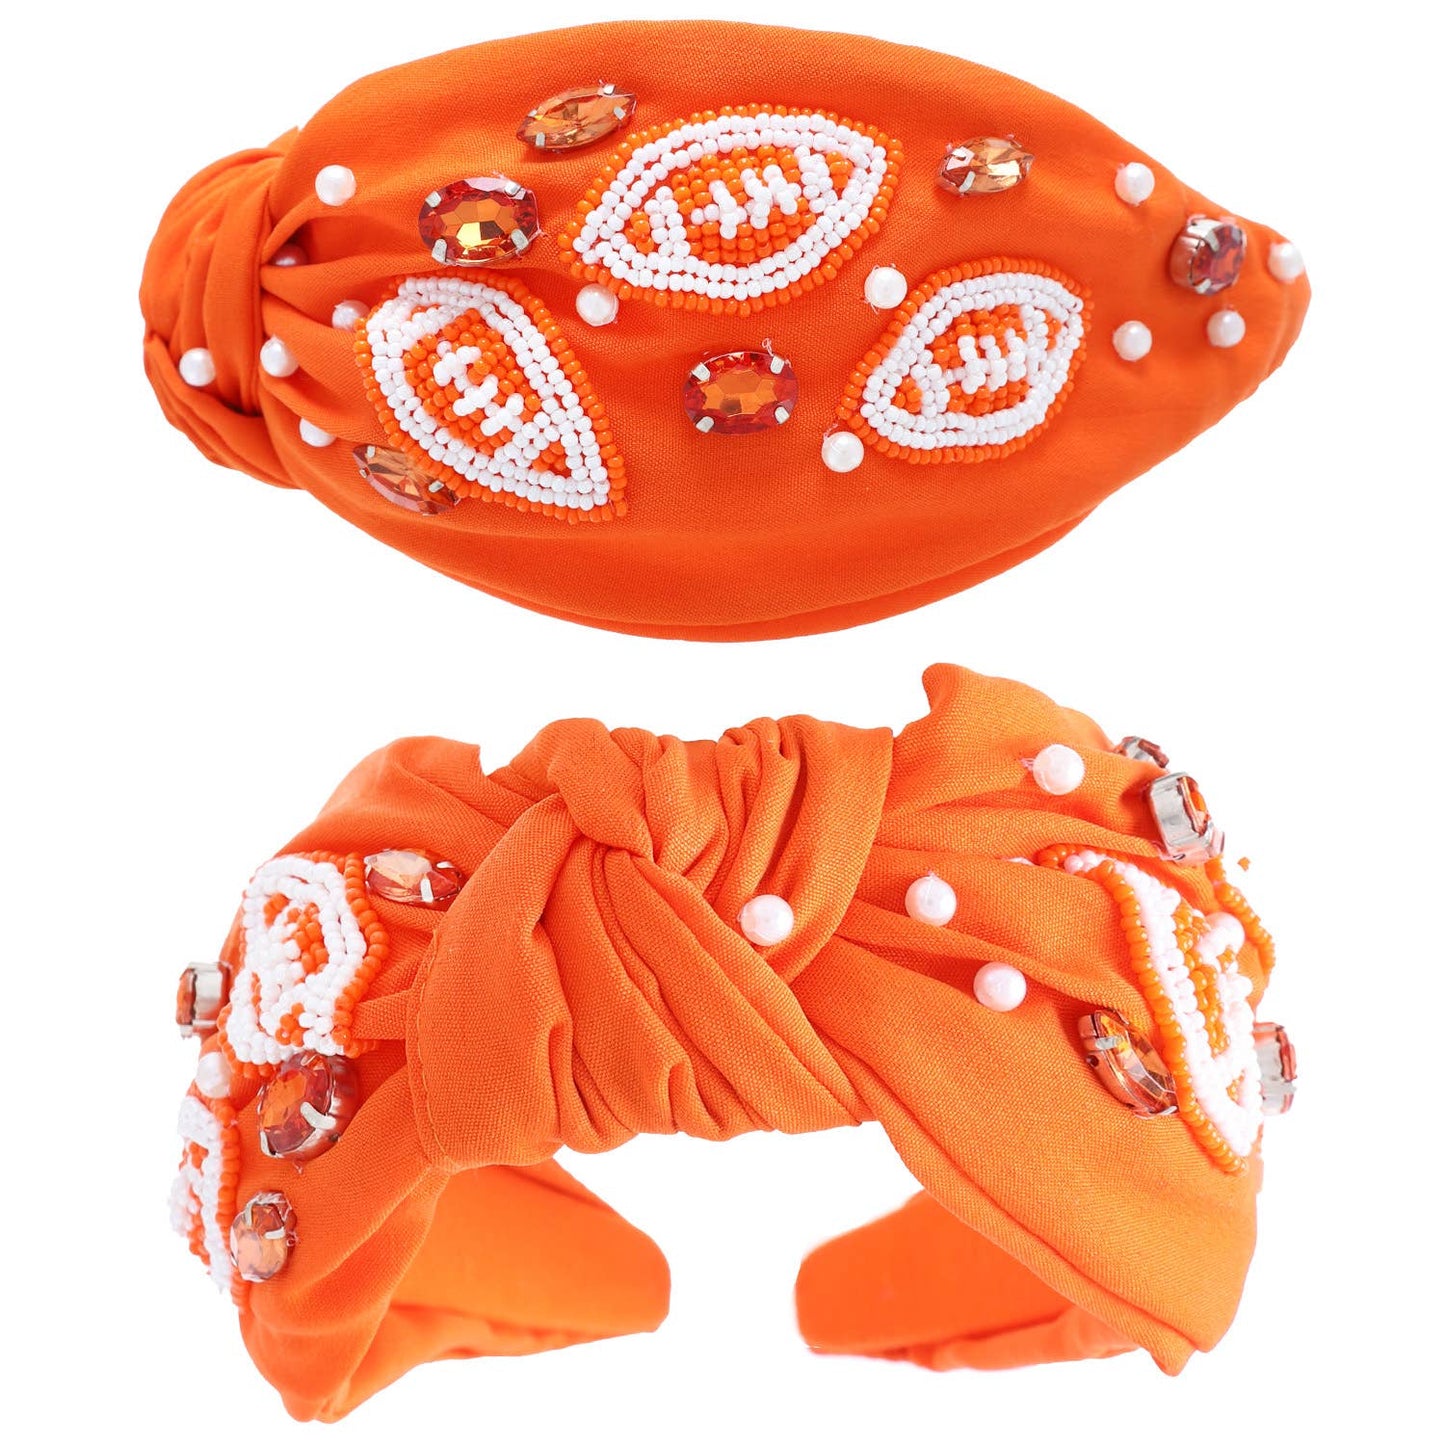 Rhinestone Gems & Beaded Football Pattern Knotted Headband